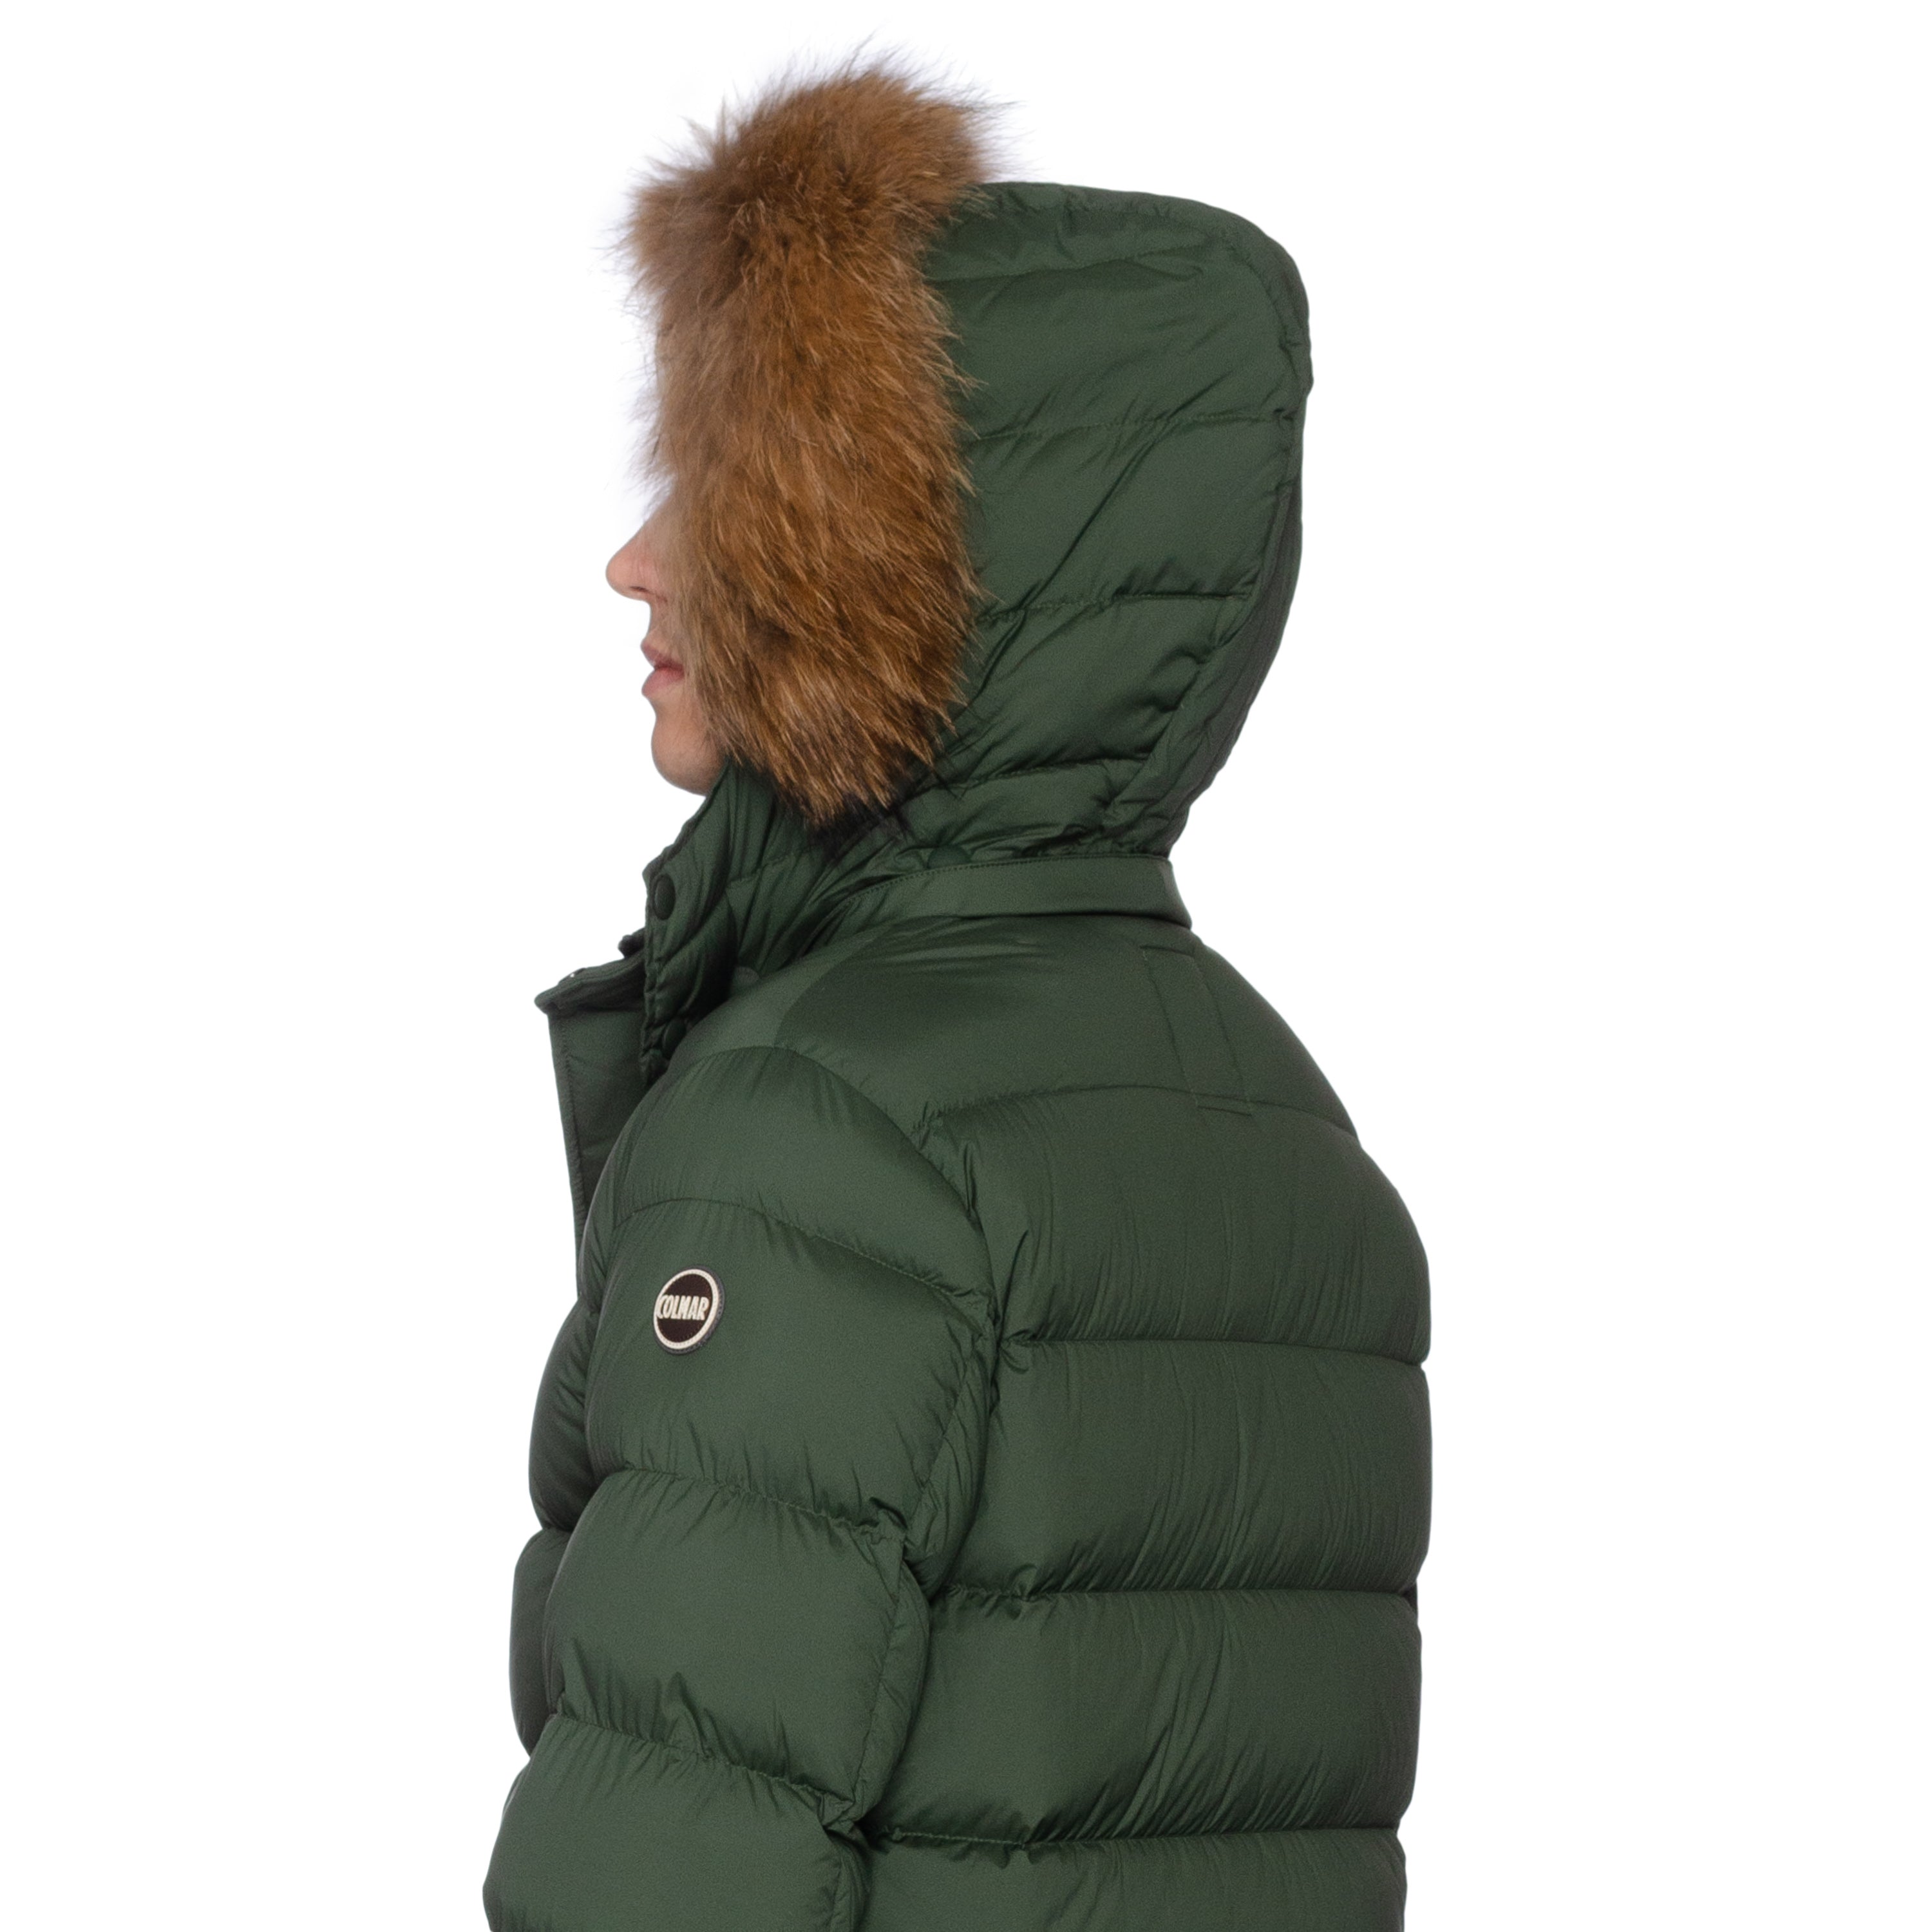 COLMAR Green Down-Feather Fur Trimmed Hooded Parka Jacket Coat EU 48 NEW US S